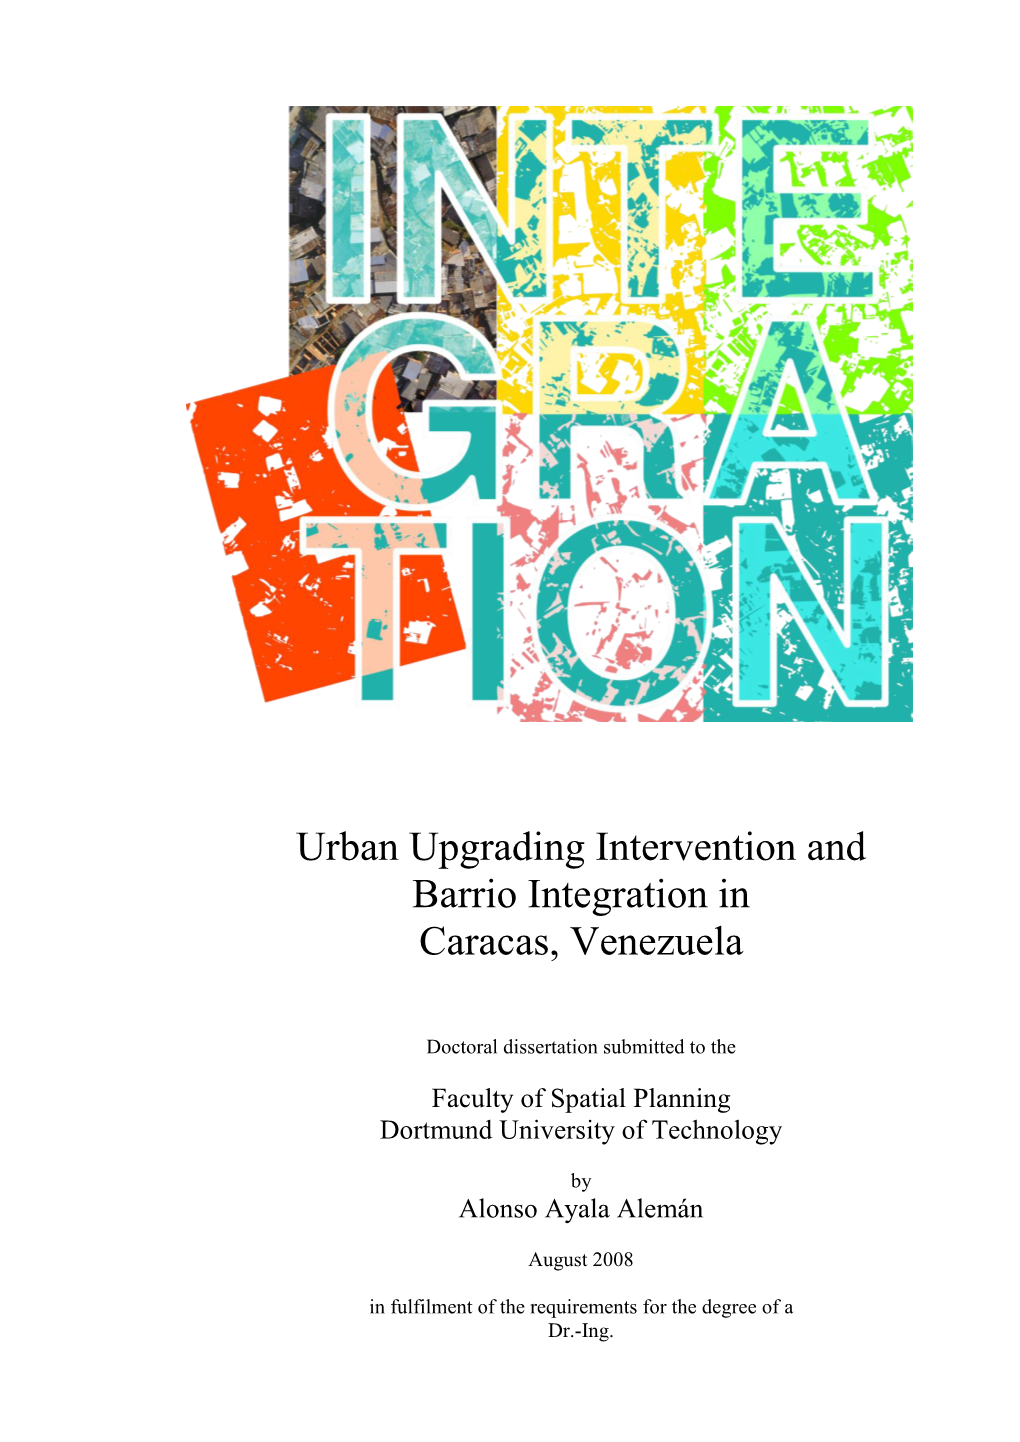 Urban Upgrading Intervention and Barrio Integration in Caracas, Venezuela